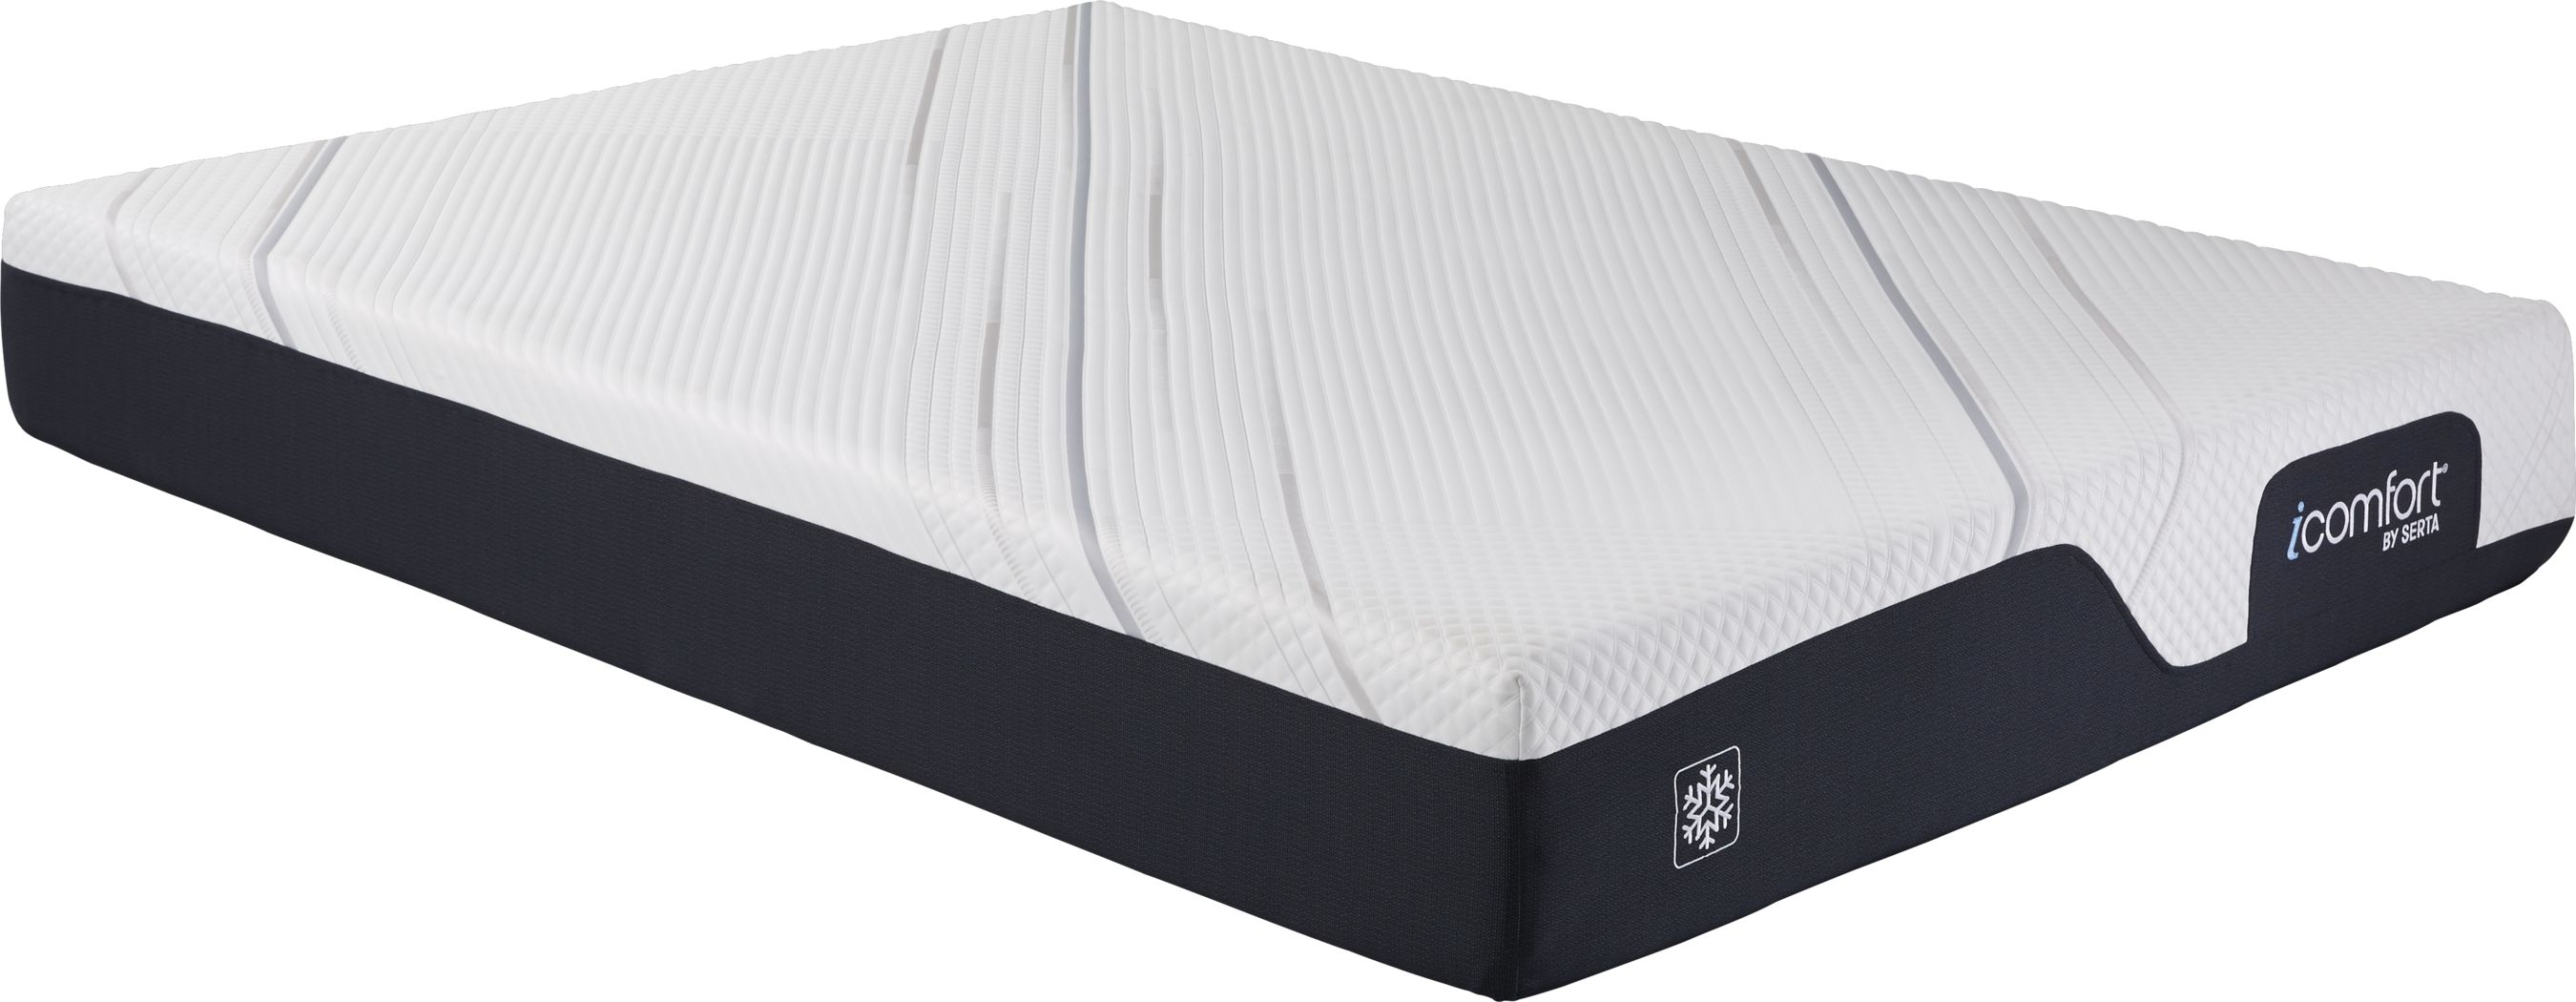 icomfort king mattress sale